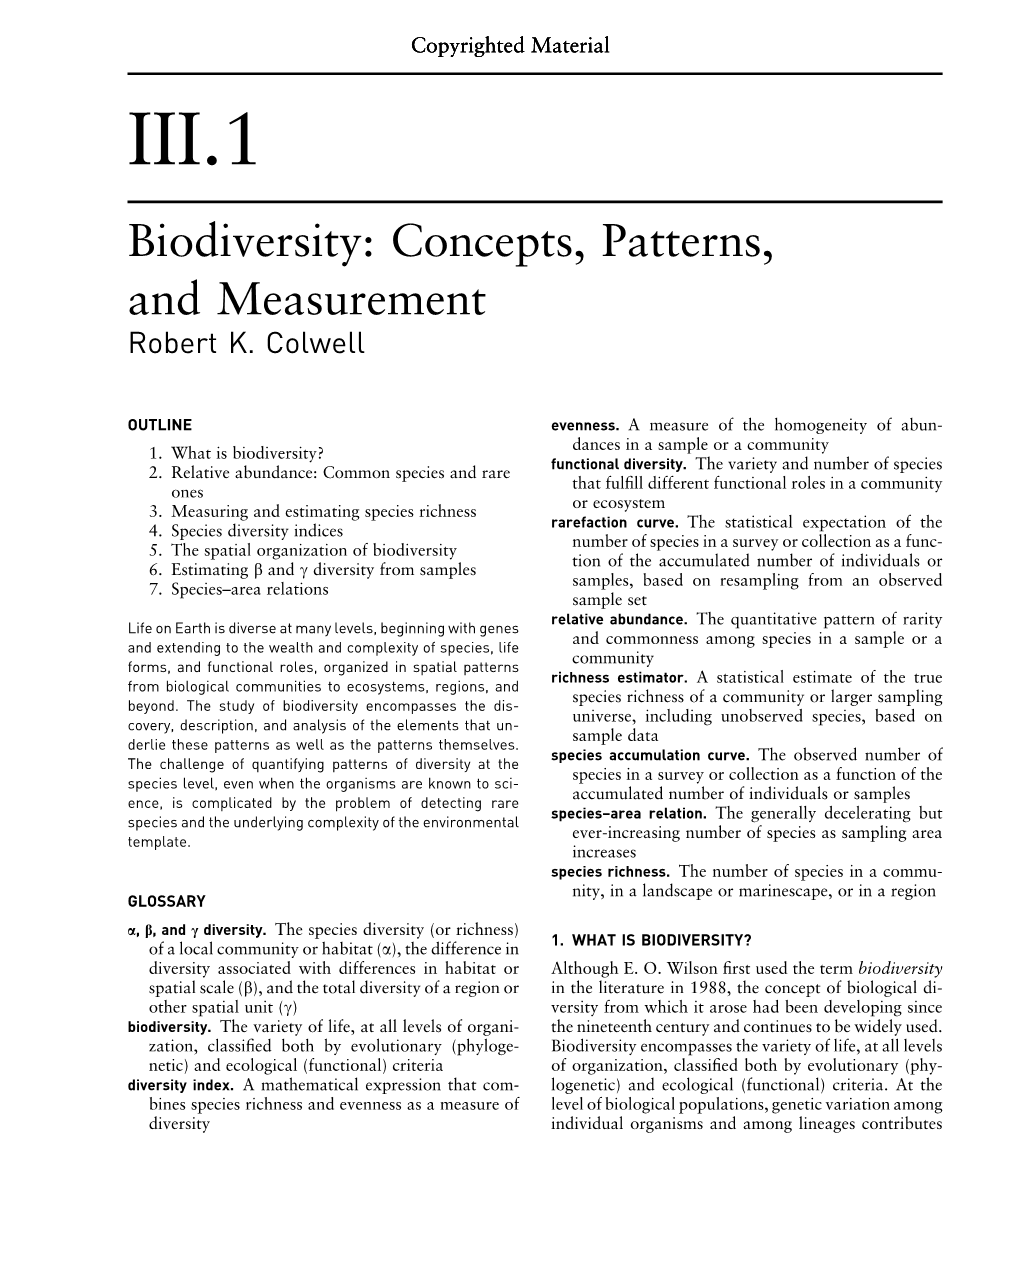 Biodiversity: Concepts, Patterns, and Measurement Robert K